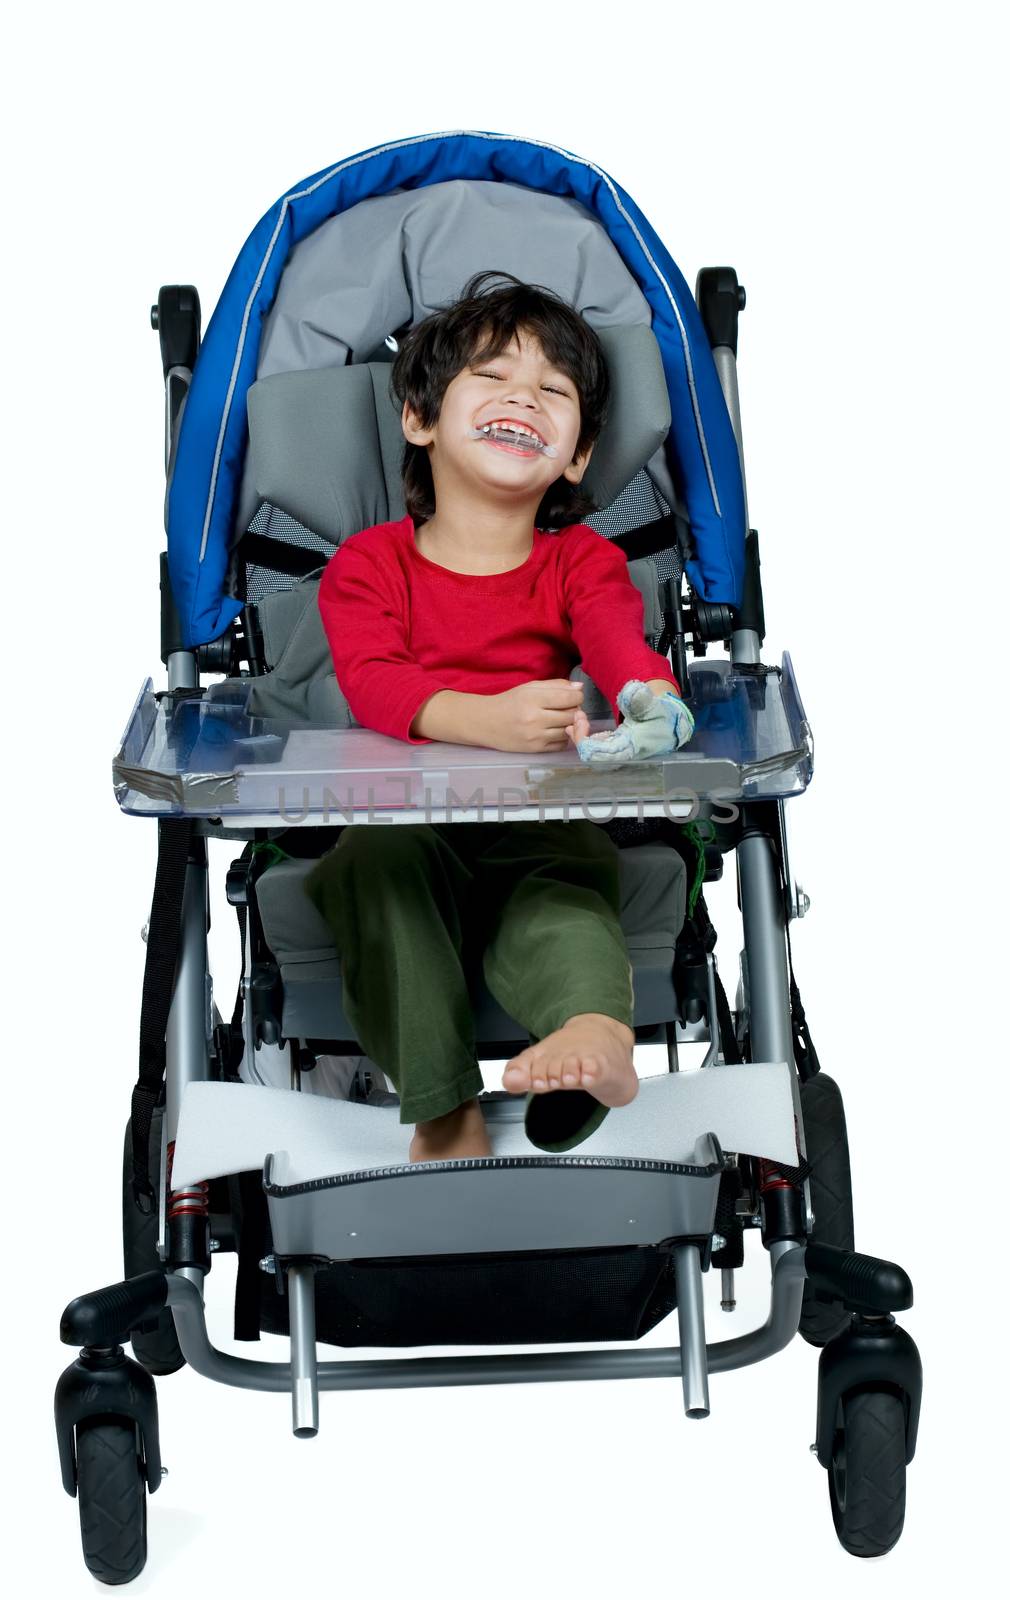 Three year old biracial disabled boy in medical stroller, happy  by jarenwicklund